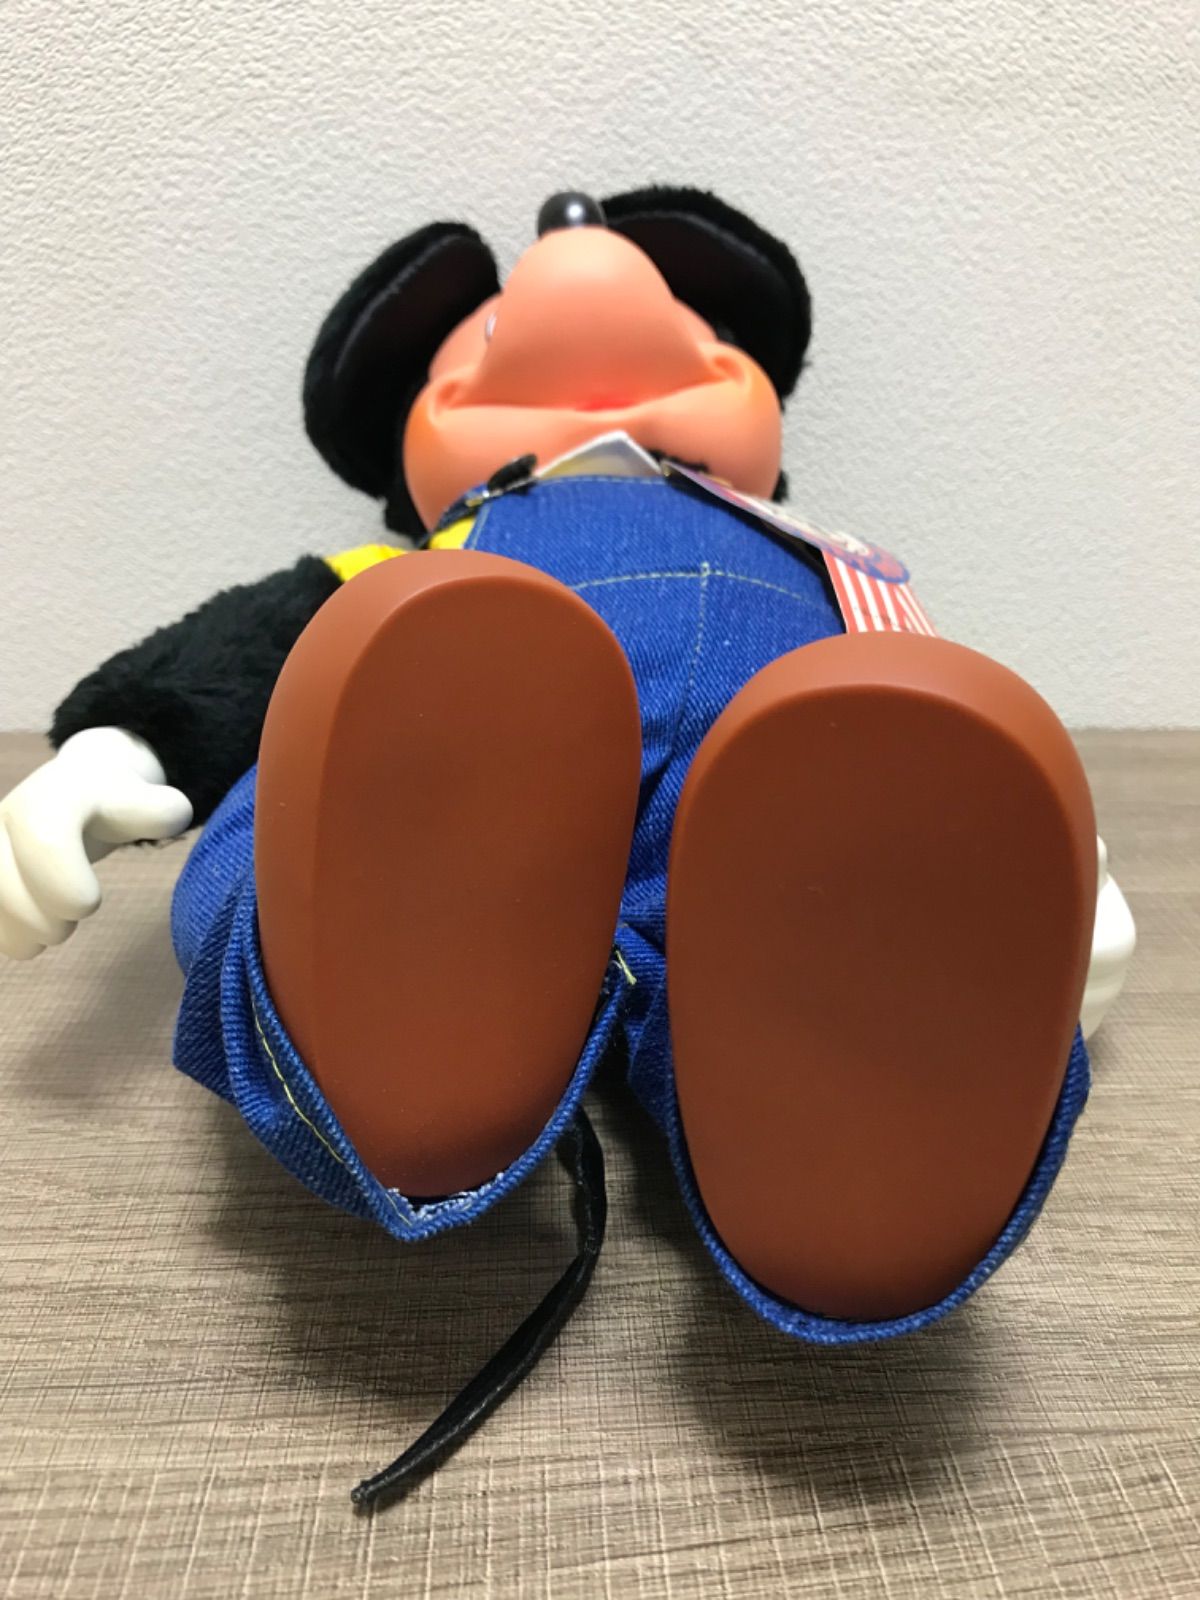 Disney cuties ミッキーマウス(中)Gパン - メルカリ